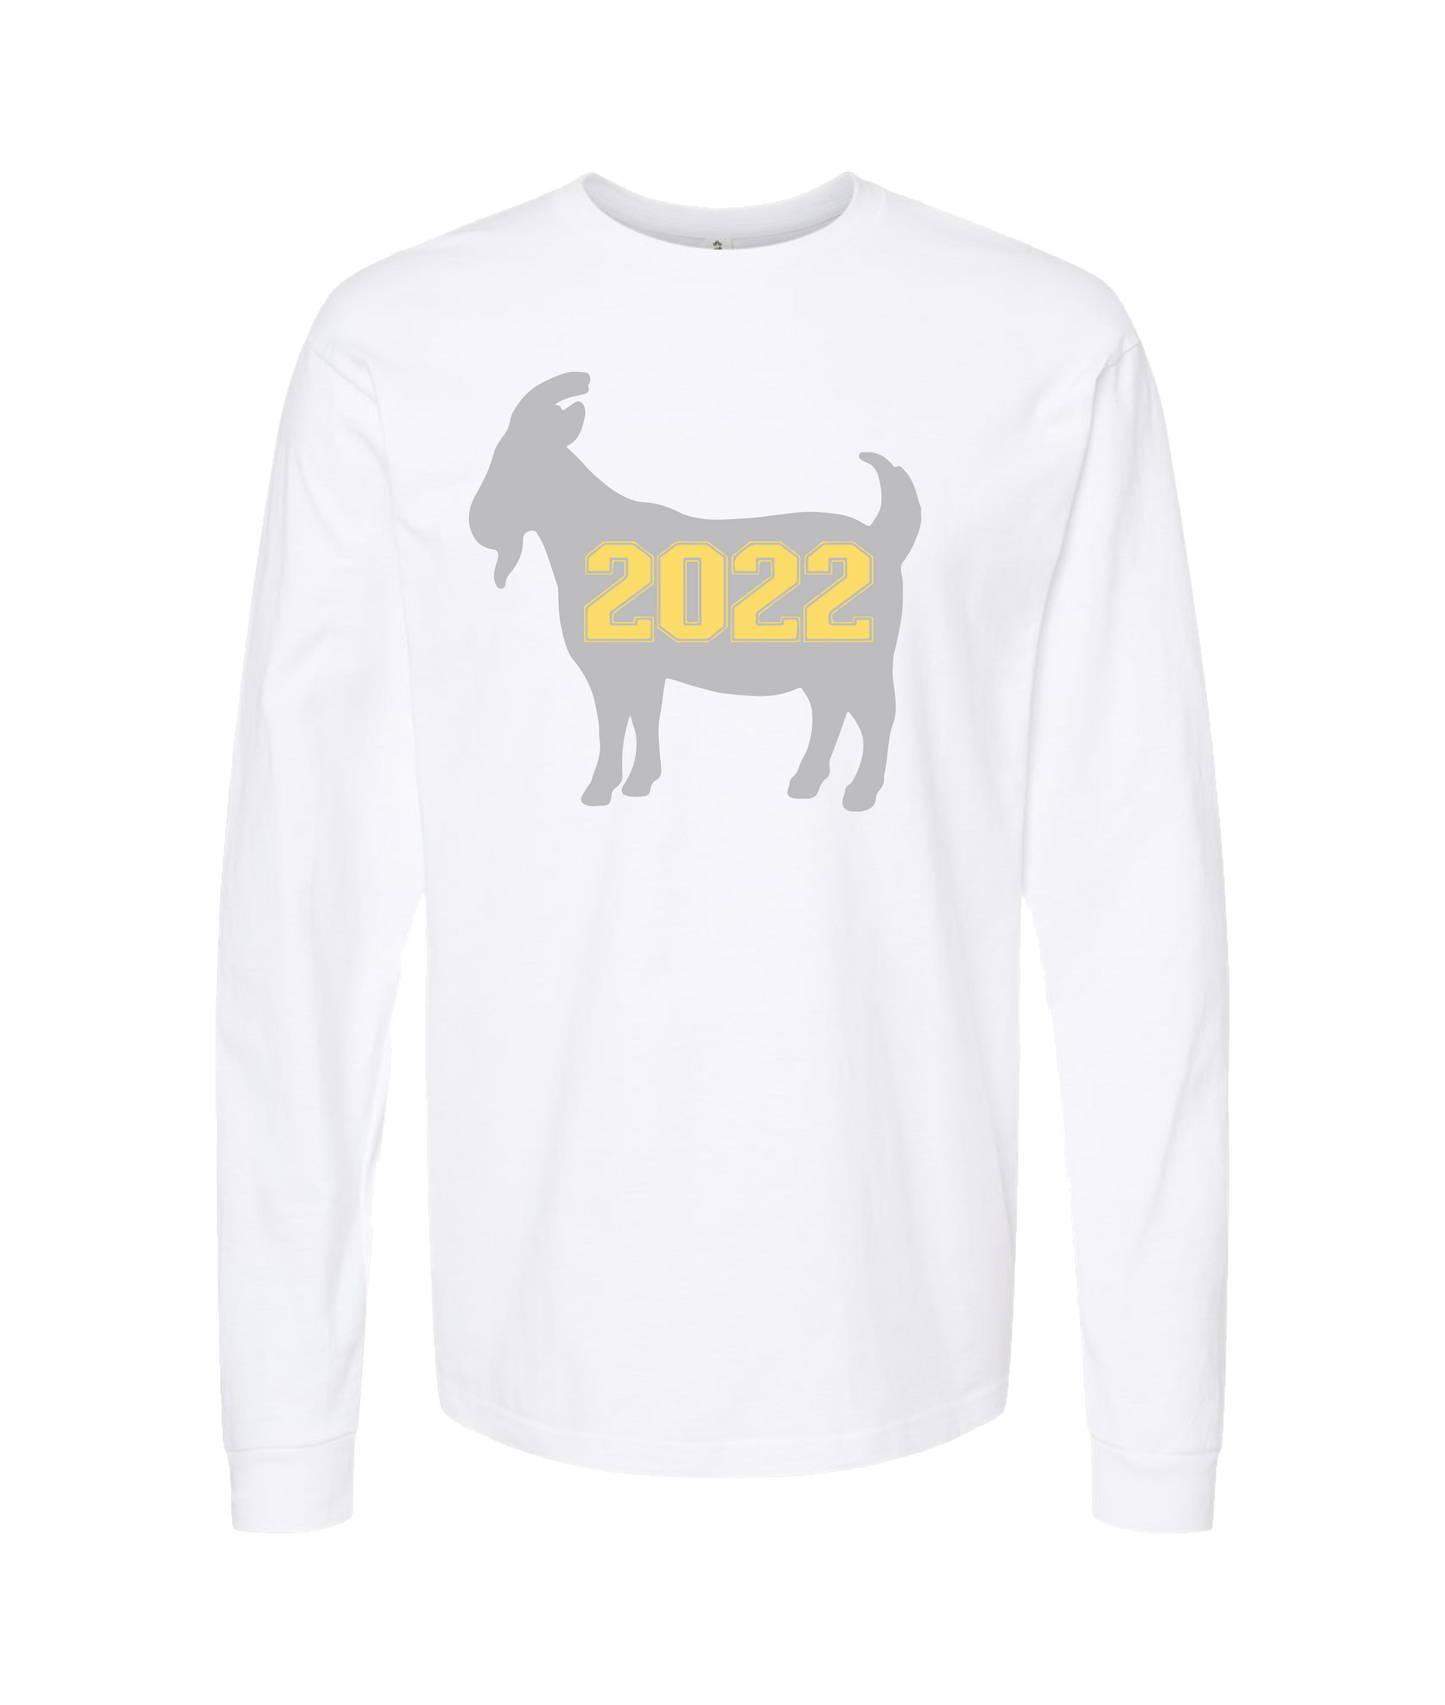 The Sportsocracy - Goat 2022 - White Long Sleeve T